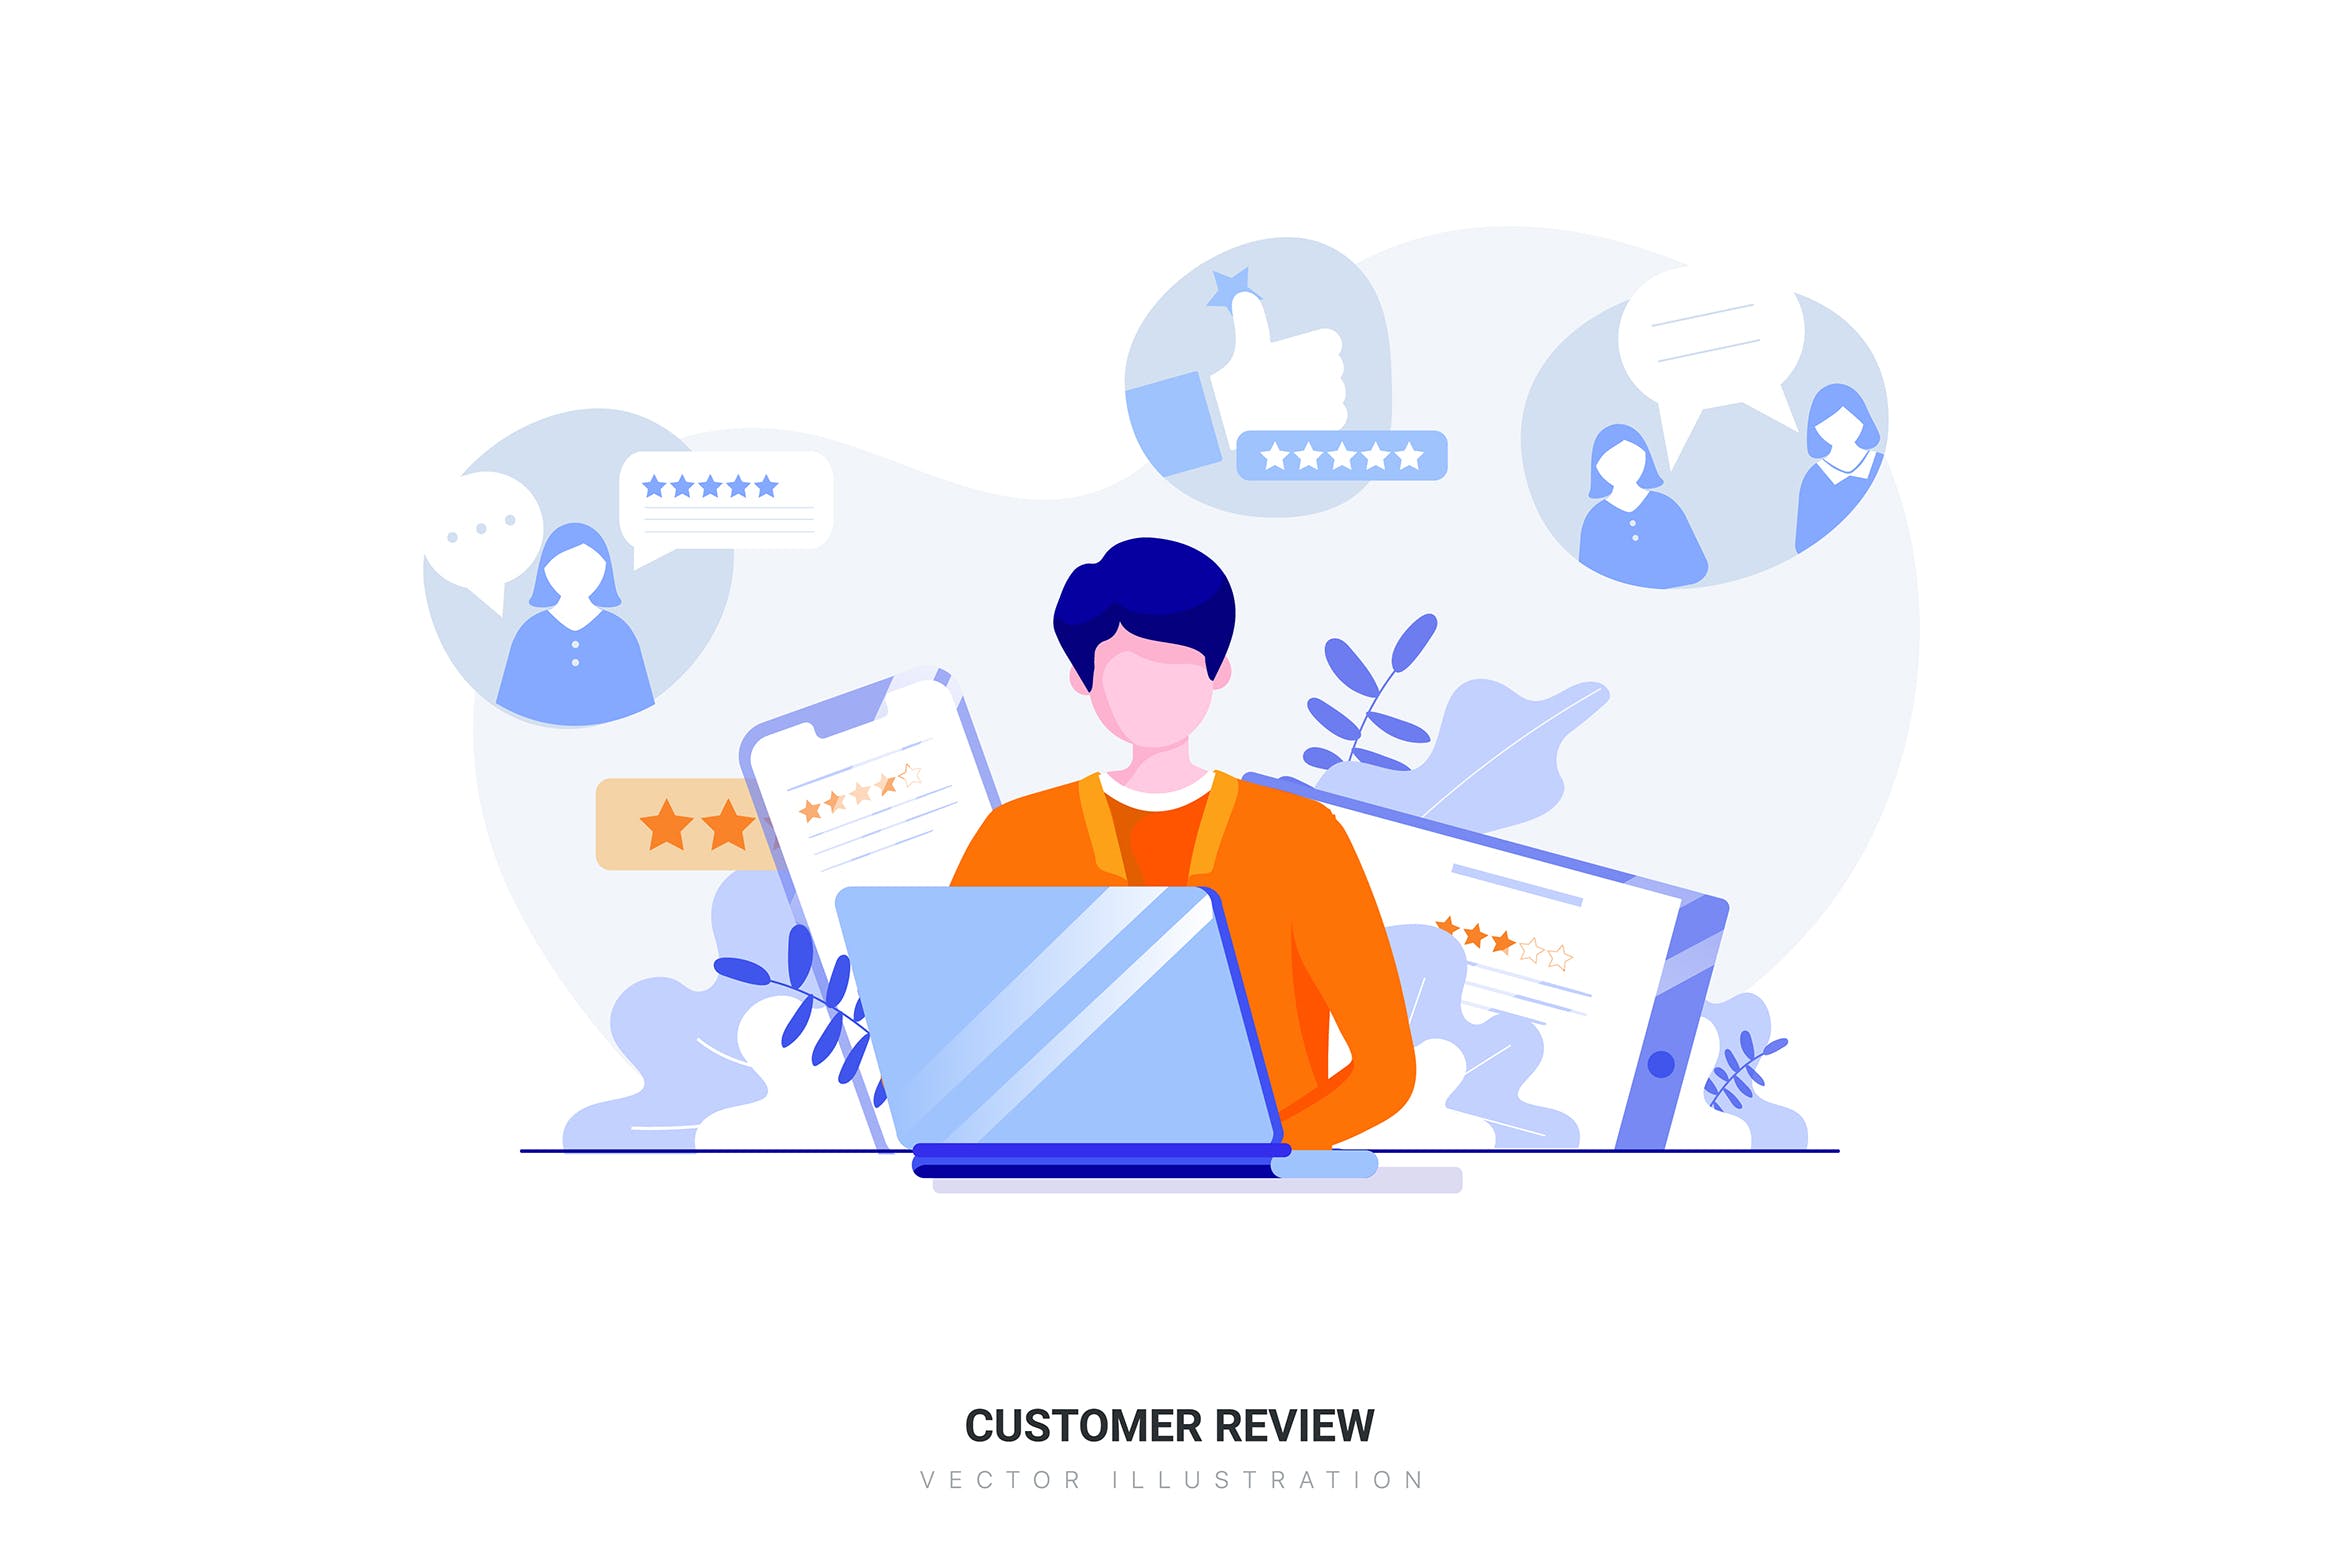 客户评论矢量概念插画素材 Customer Review Vector Illustration插图